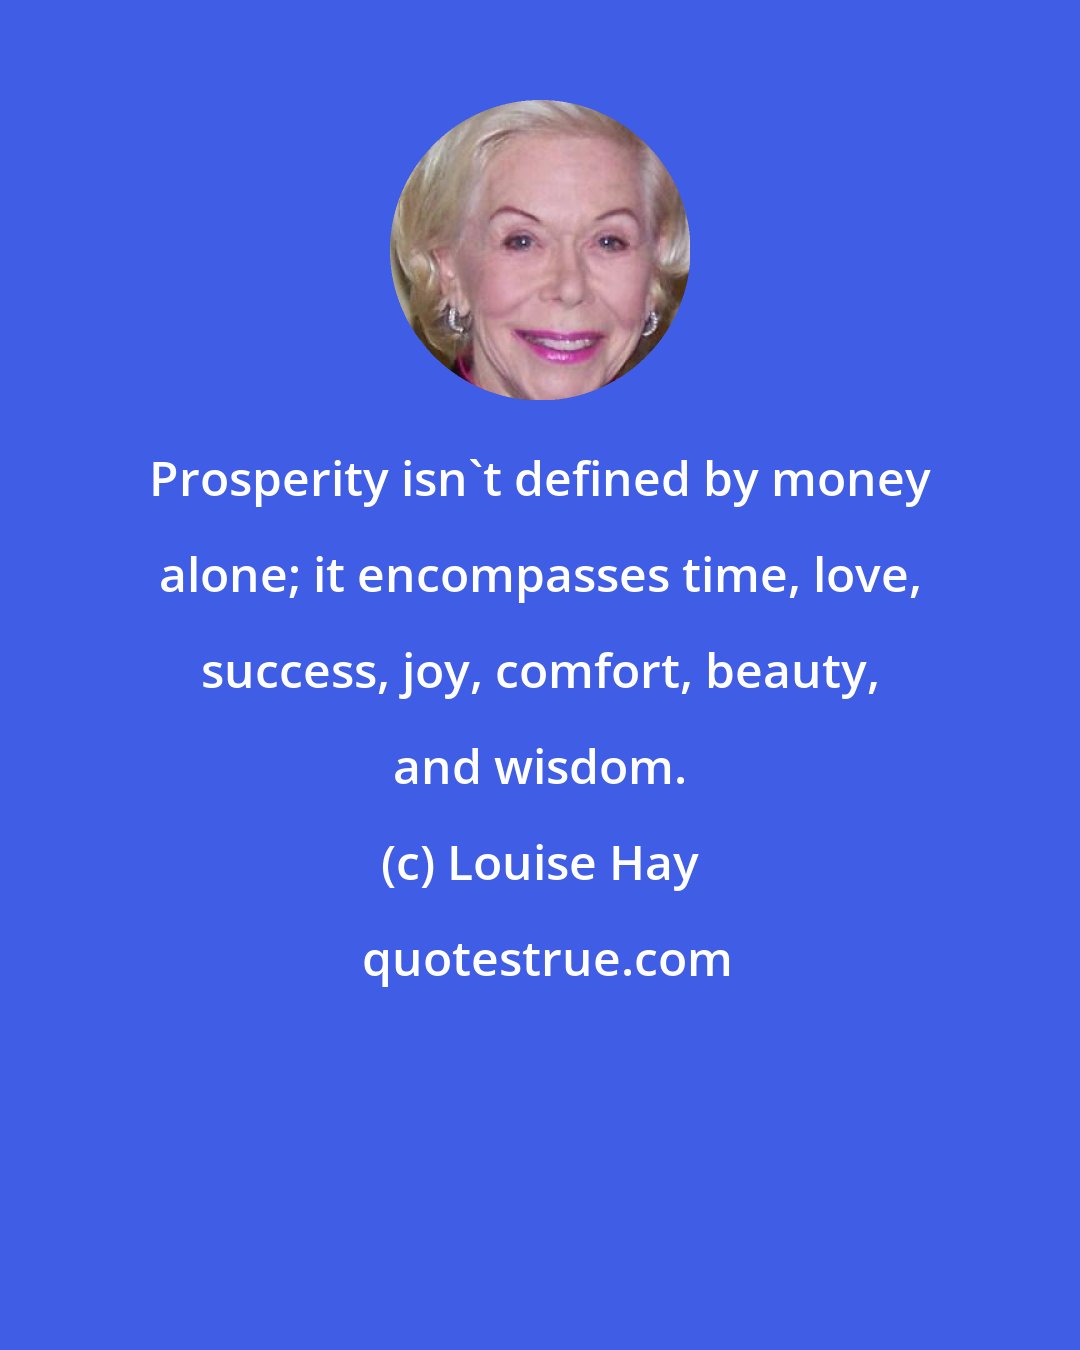 Louise Hay: Prosperity isn't defined by money alone; it encompasses time, love, success, joy, comfort, beauty, and wisdom.